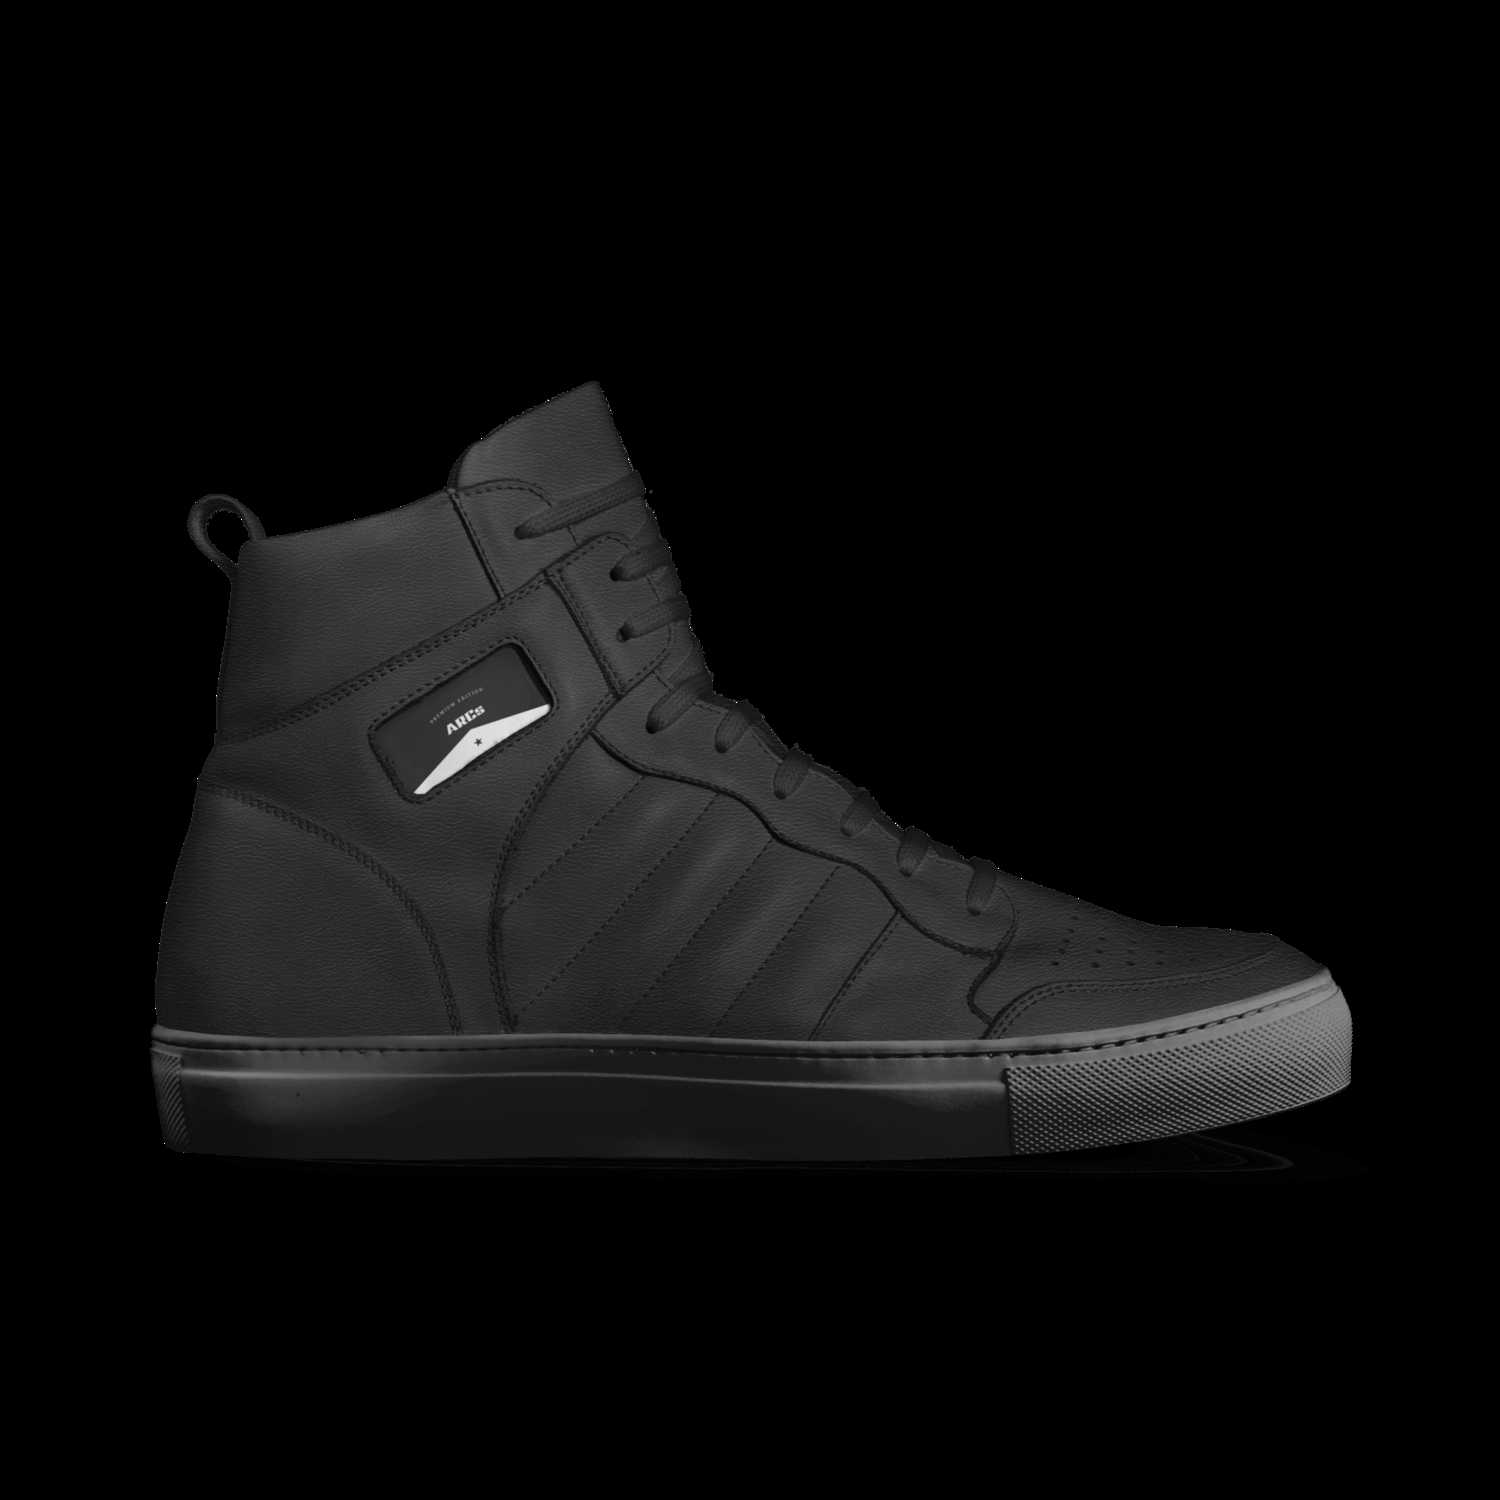 A Custom Shoe concept by Jesus Rodriguez